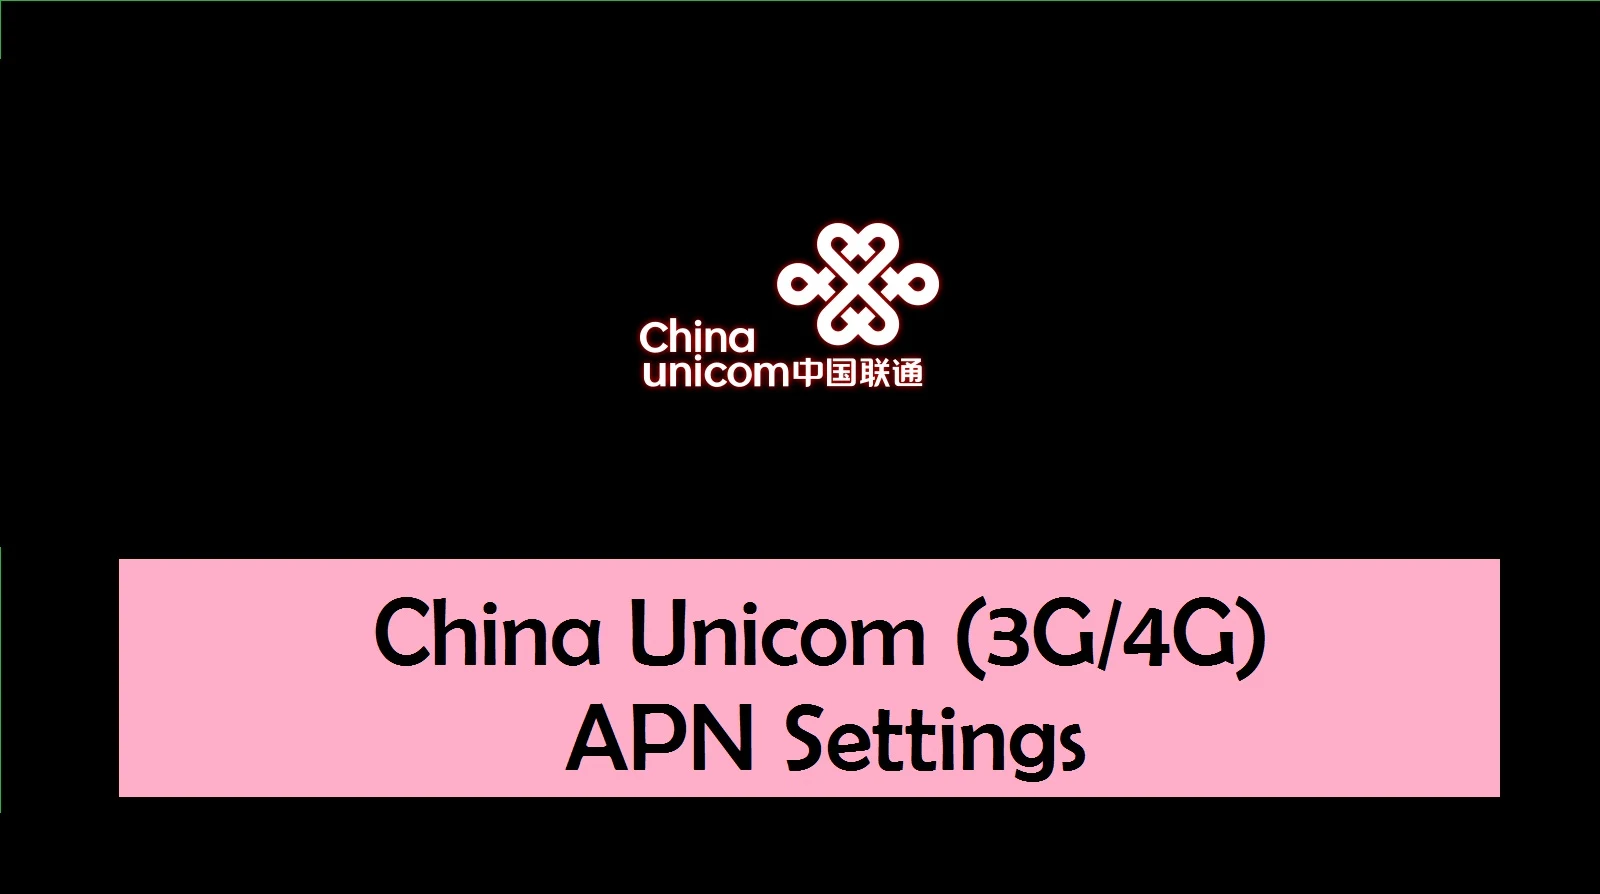 China Unicom (3G/4G) APN Settings